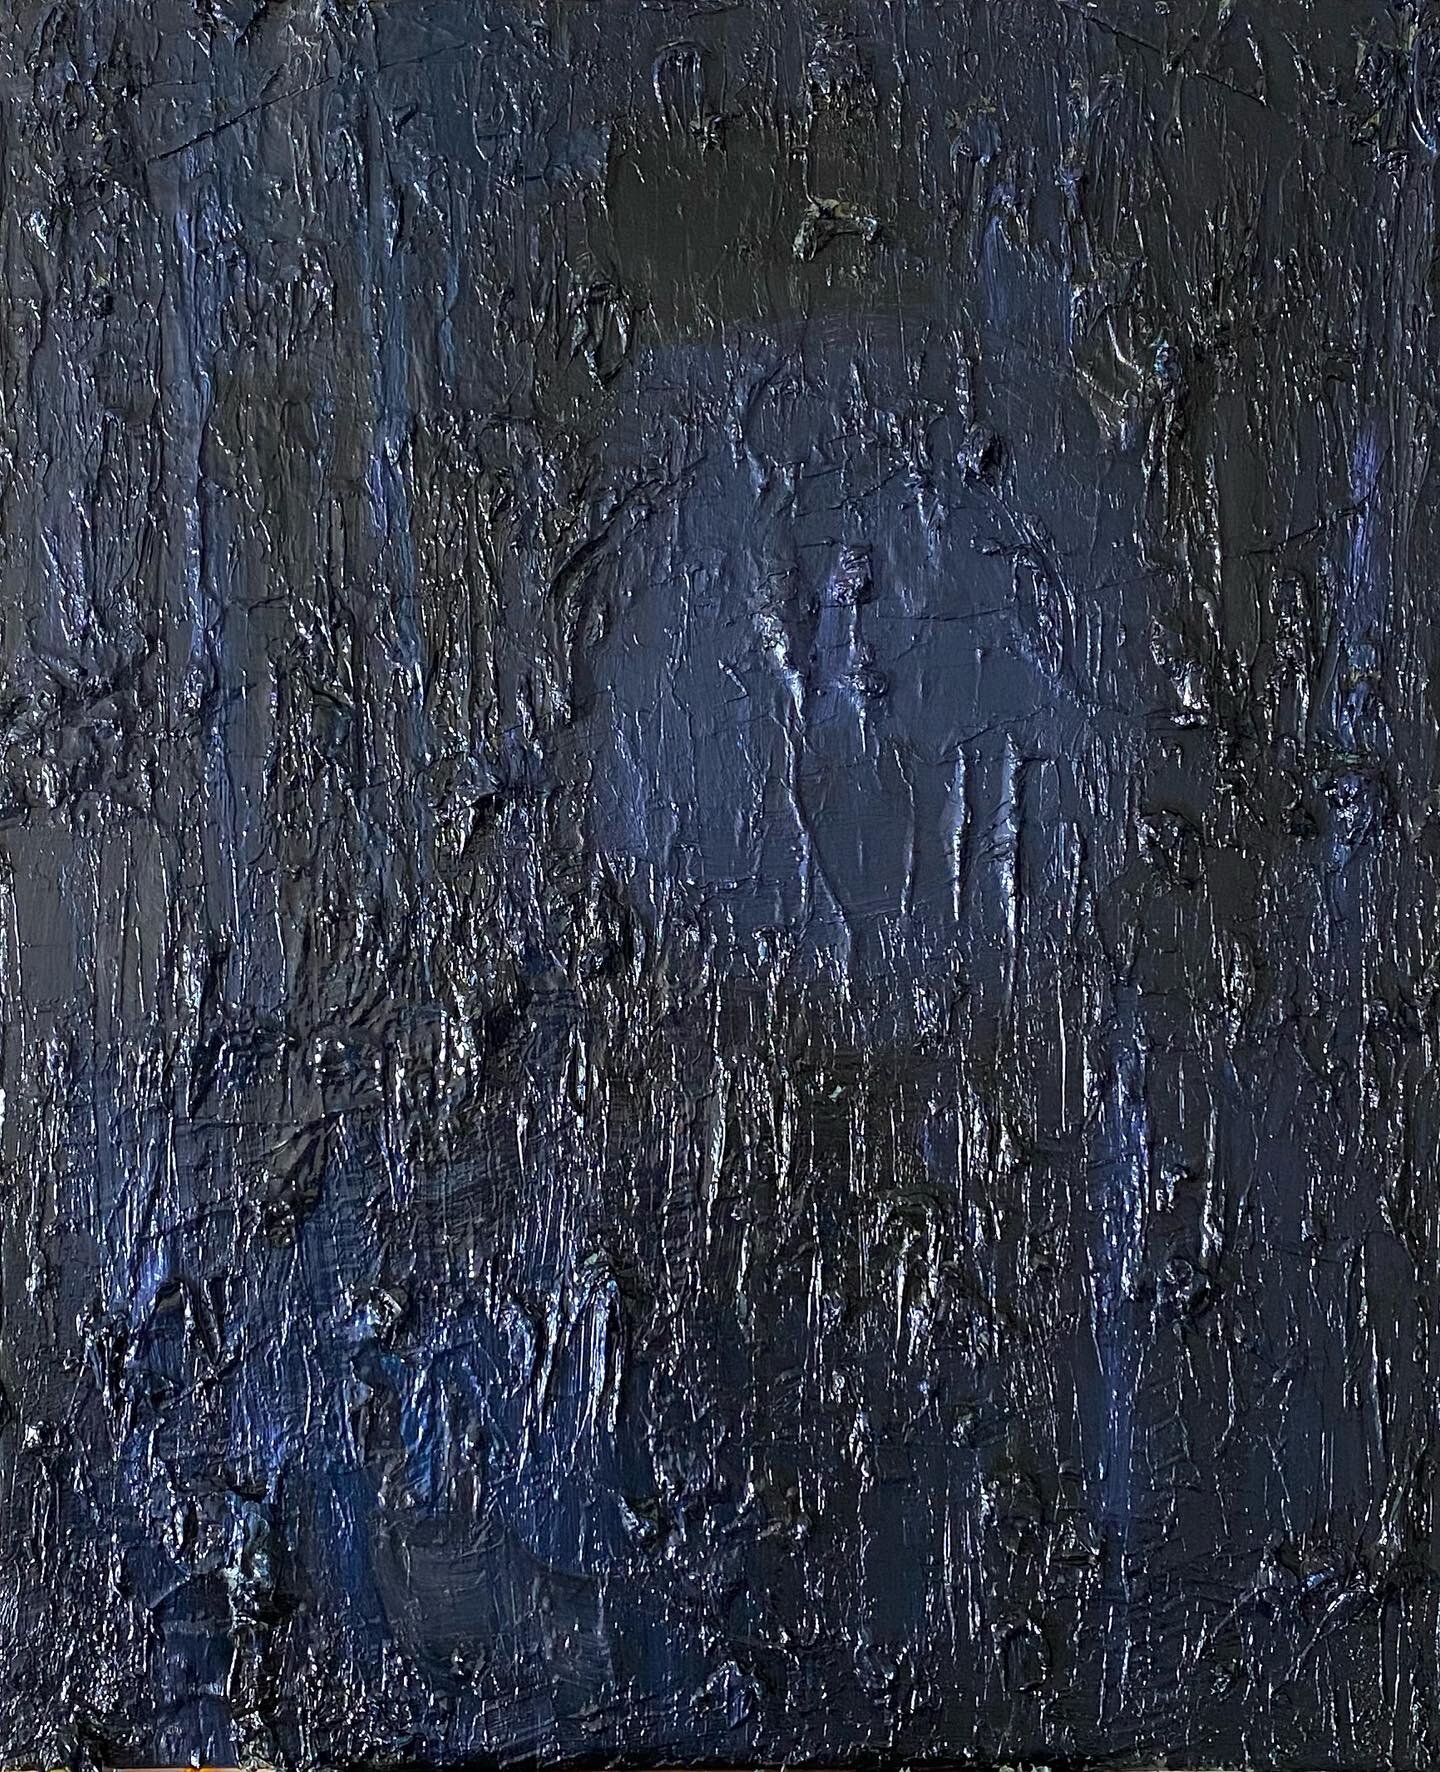 &ldquo;Moon 01&rdquo; Mixed media on canvas #moon #autumnmoon #moonfestival #blackpaintings #abstractart #abstractpainting #abstract